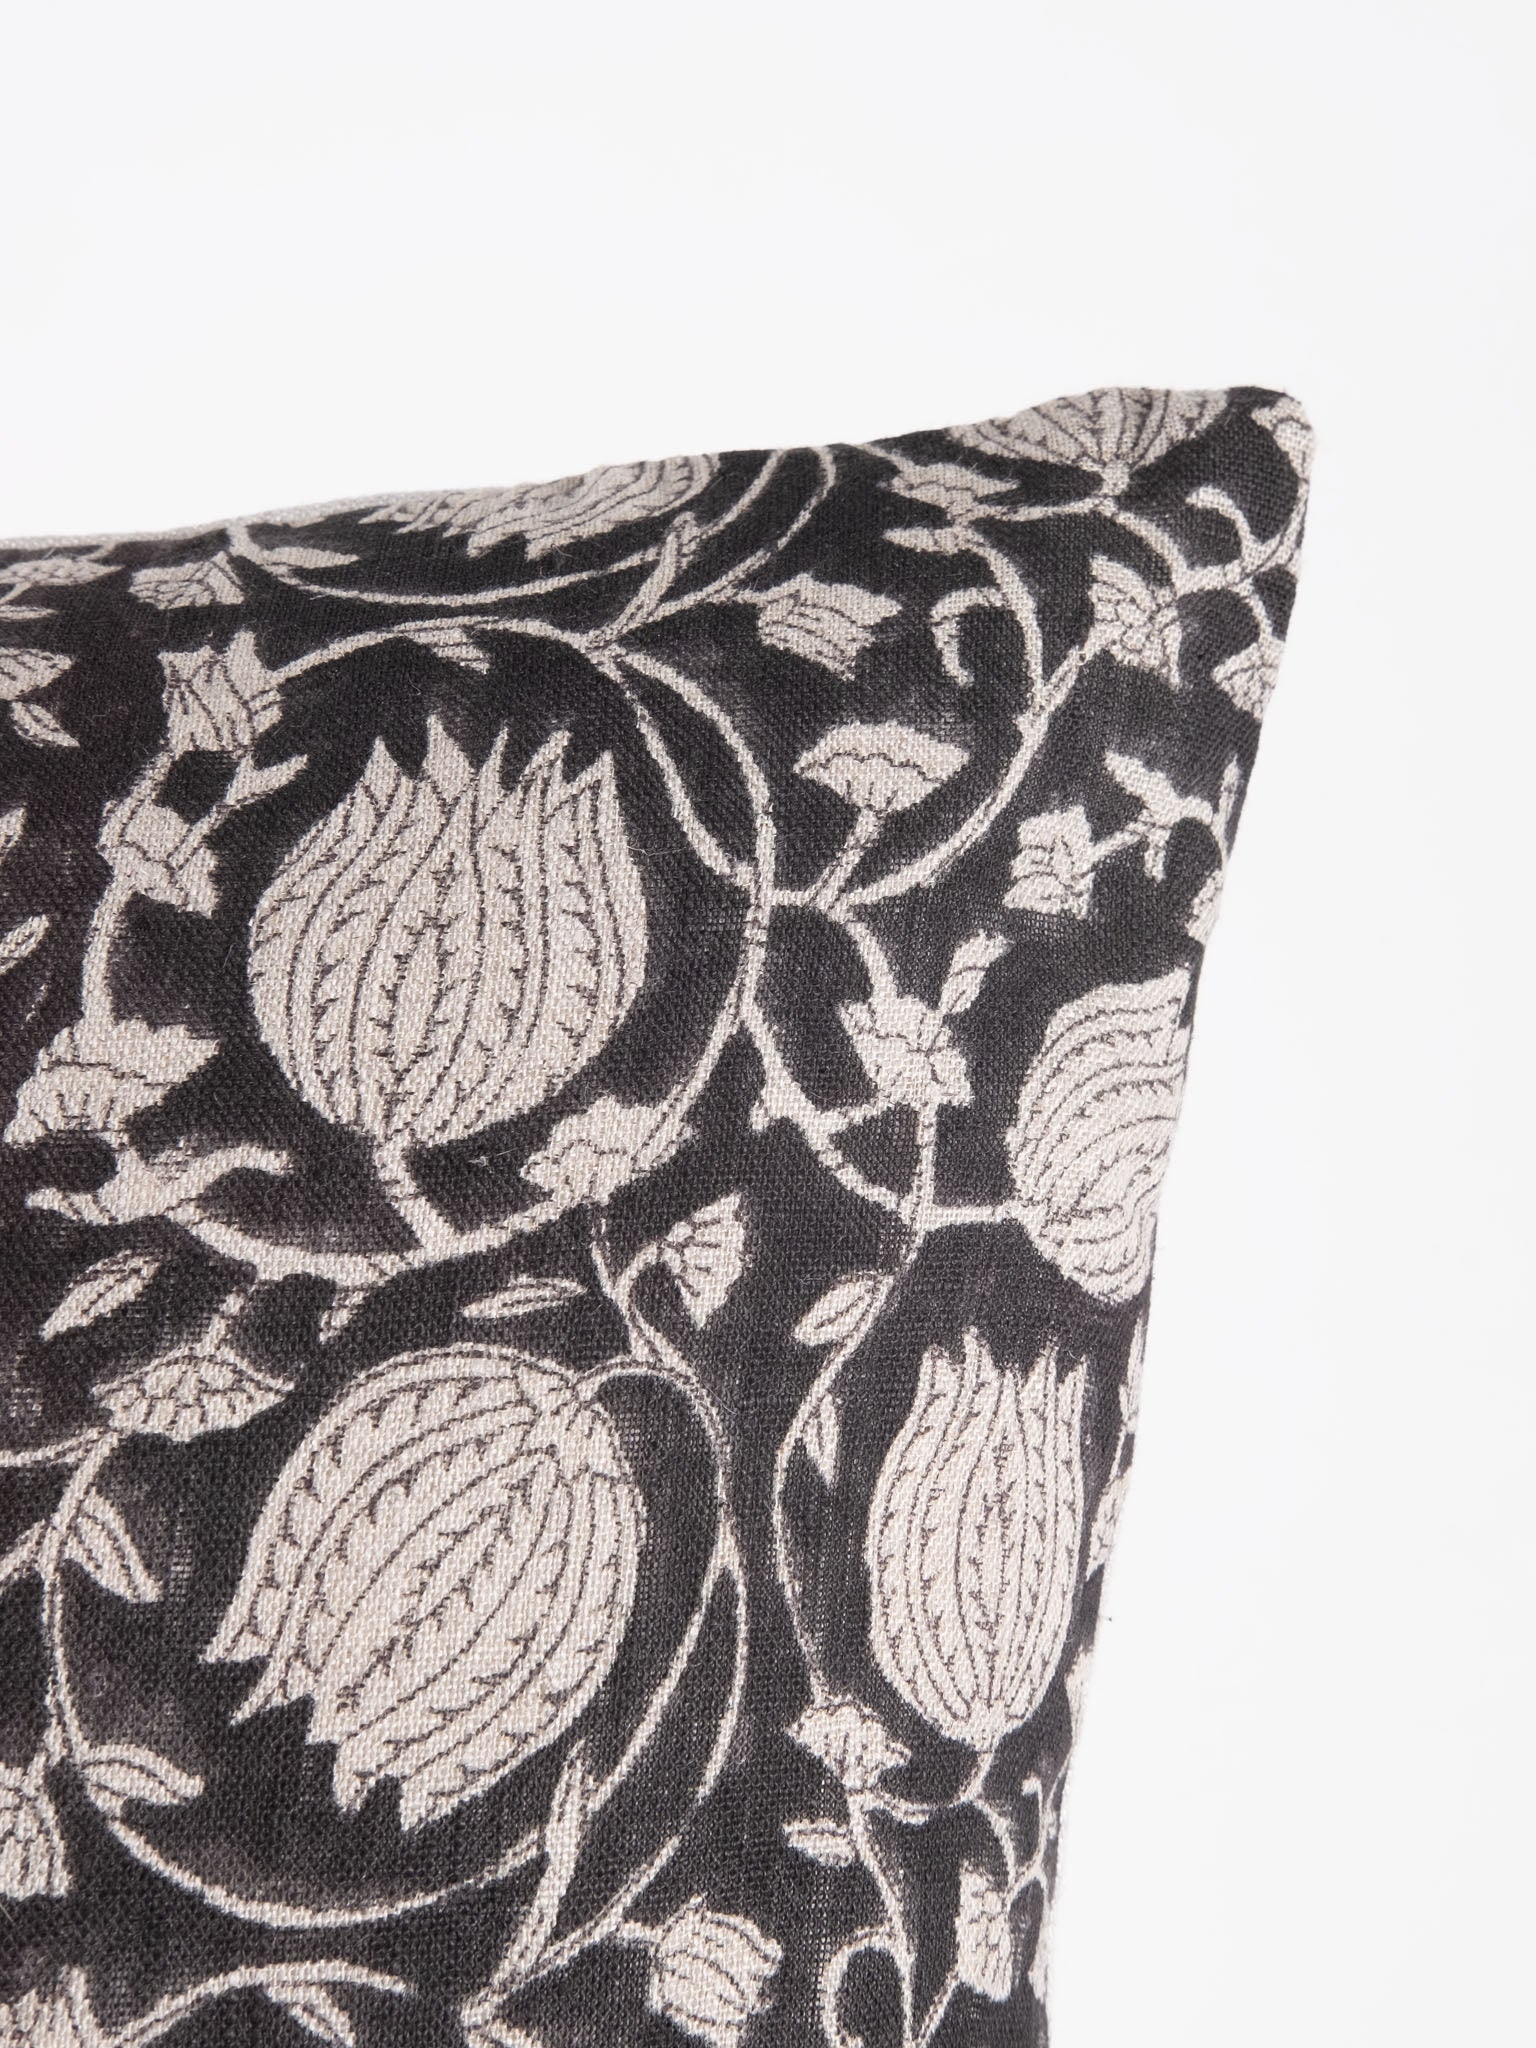 Floral lumbar cushion charcoal